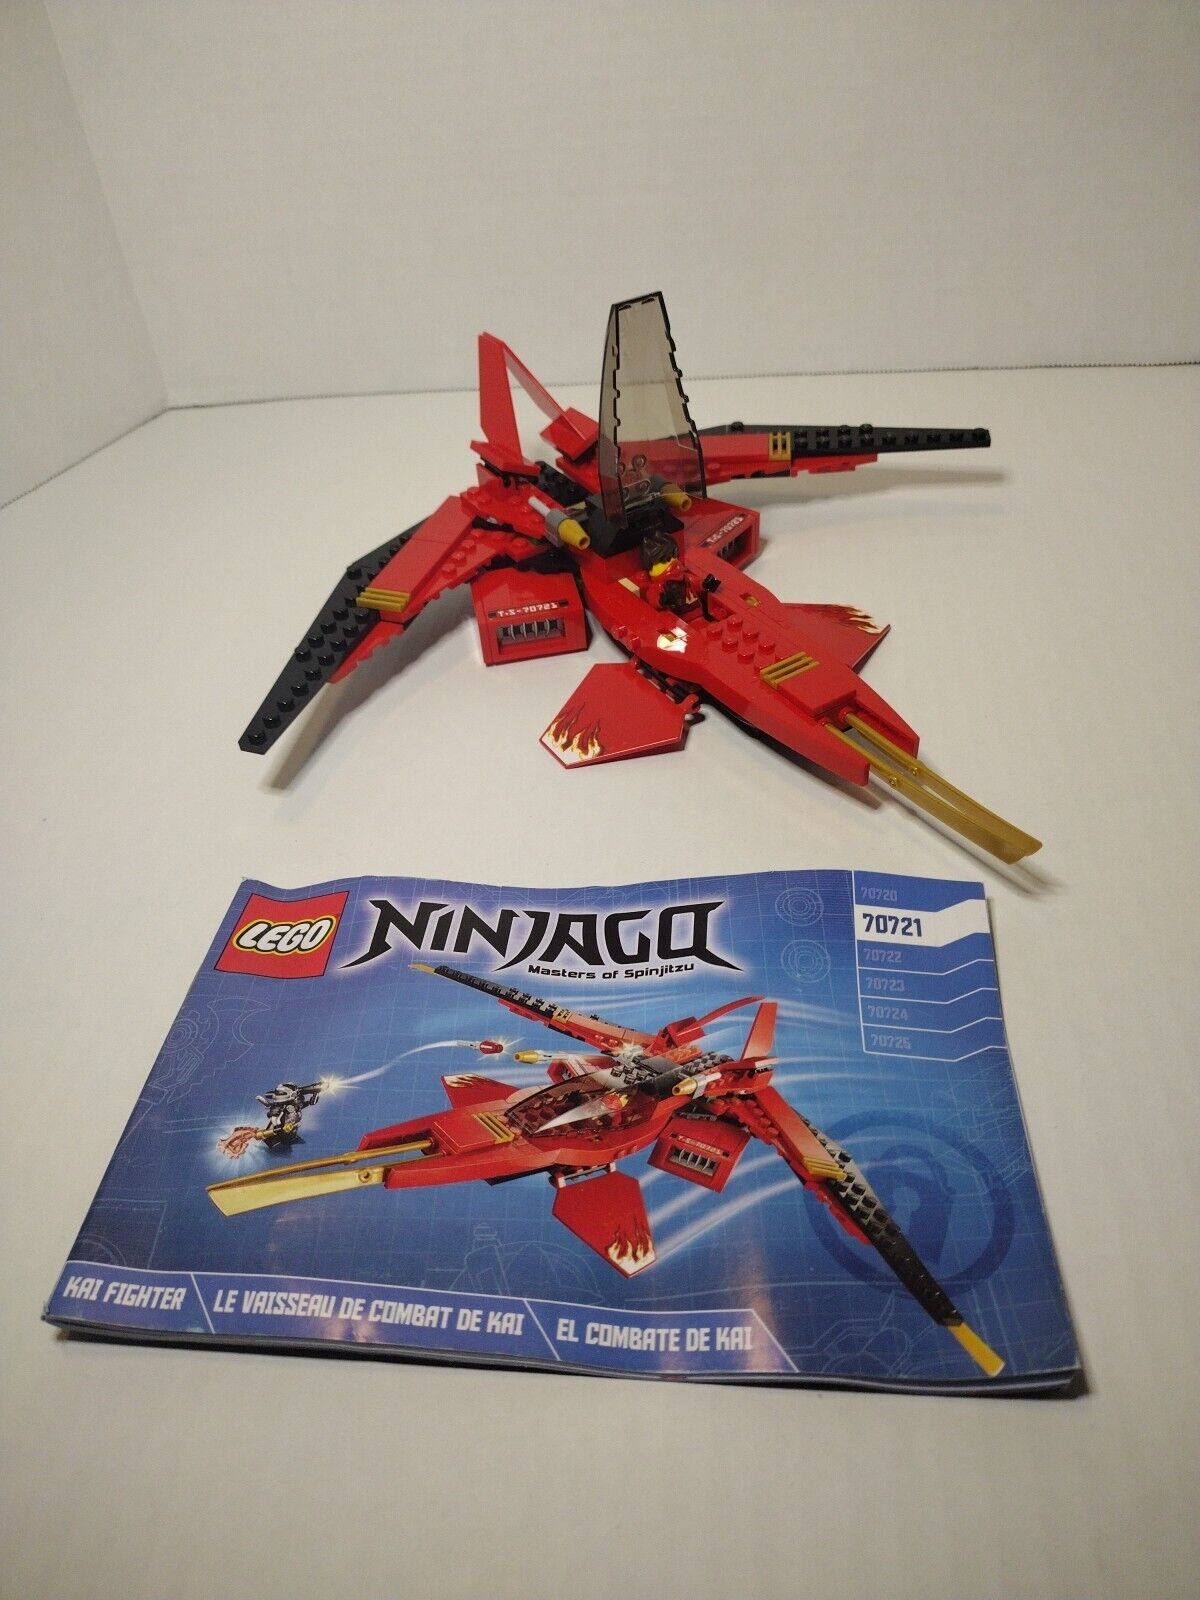 LEGO NINJAGO: Kai Fighter (70721) USED Includes Minifig Incomplete